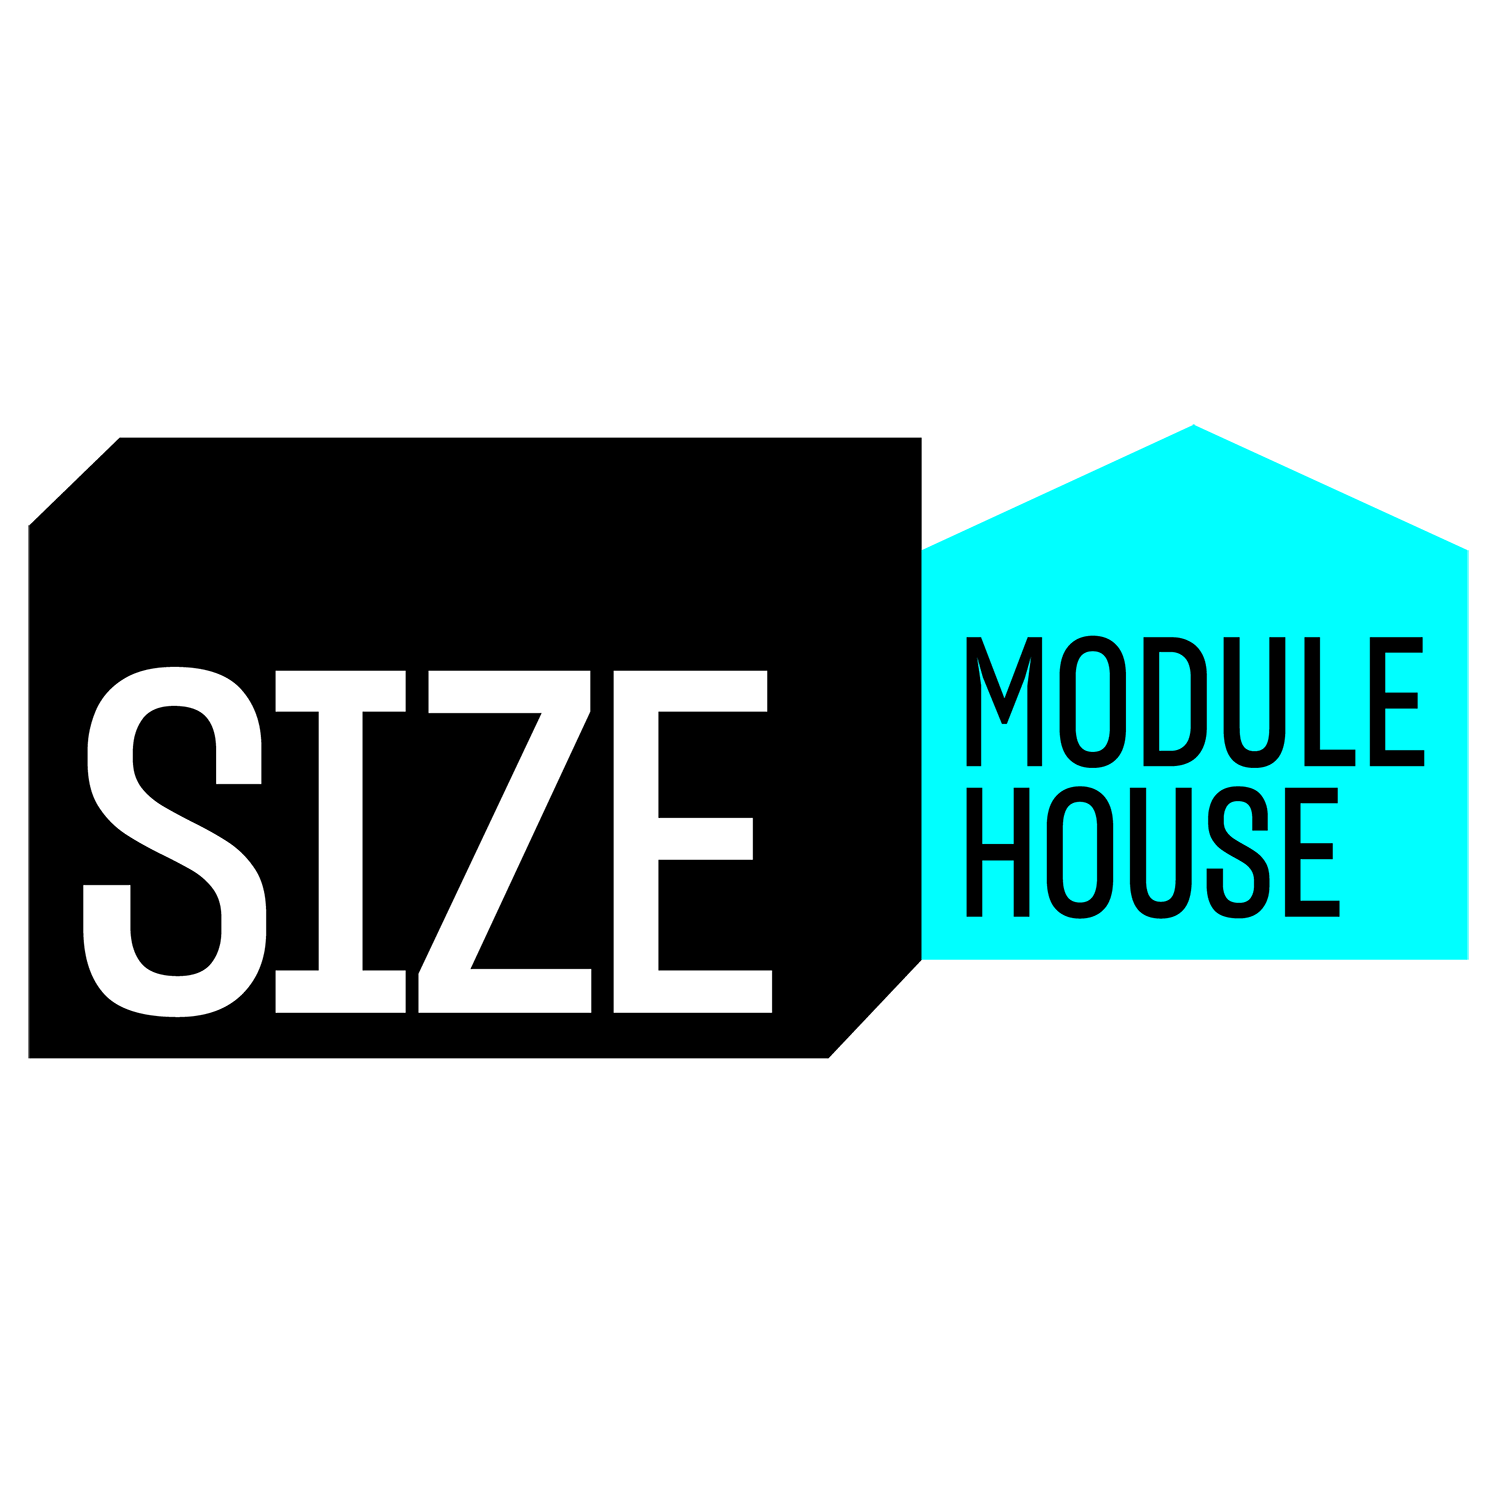 SIZE module house